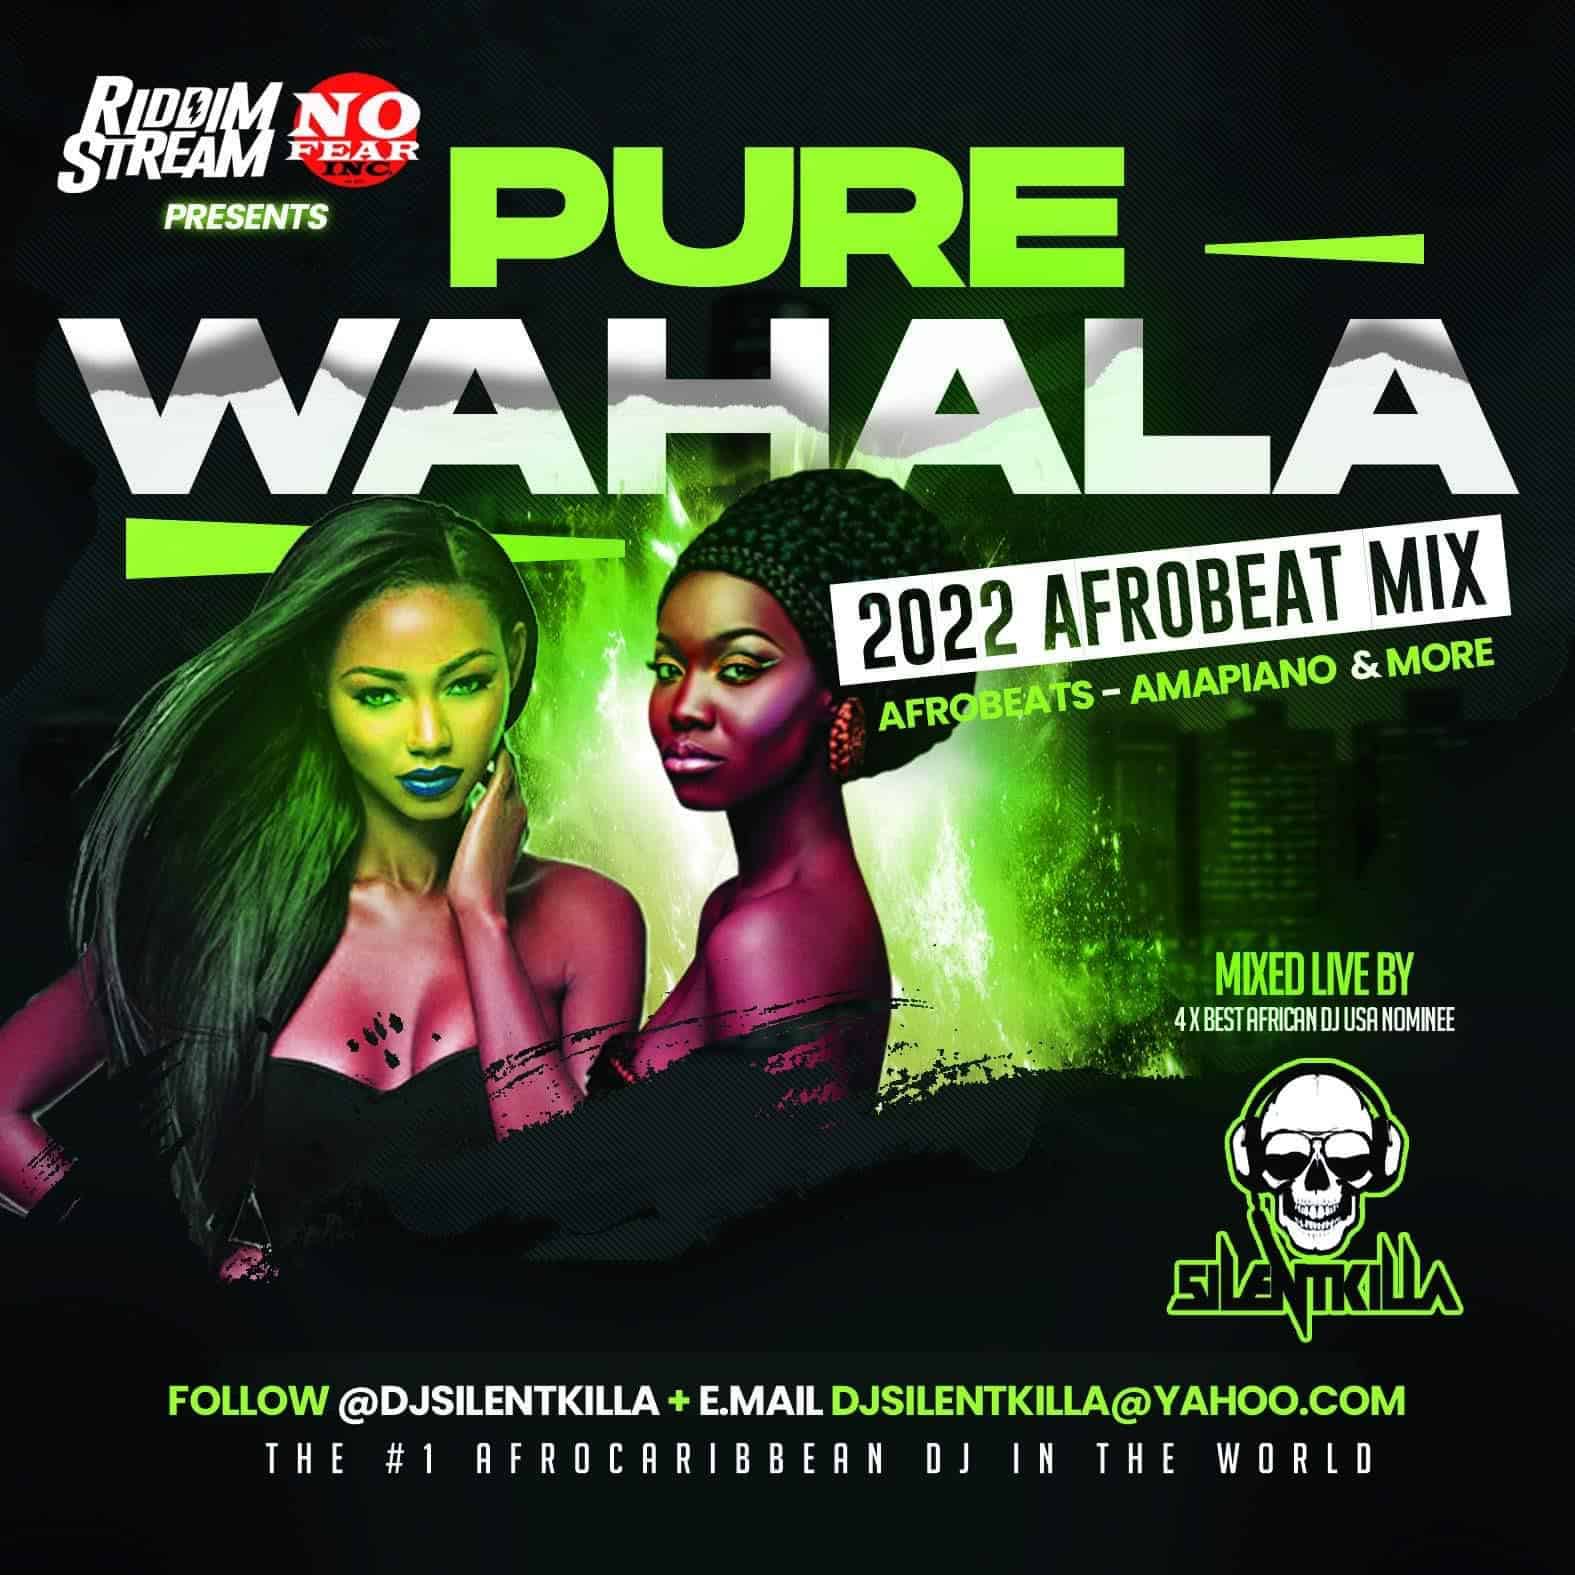 DJ Silentkilla - "PURE WAHALA" 2022 Afrobeat Mix